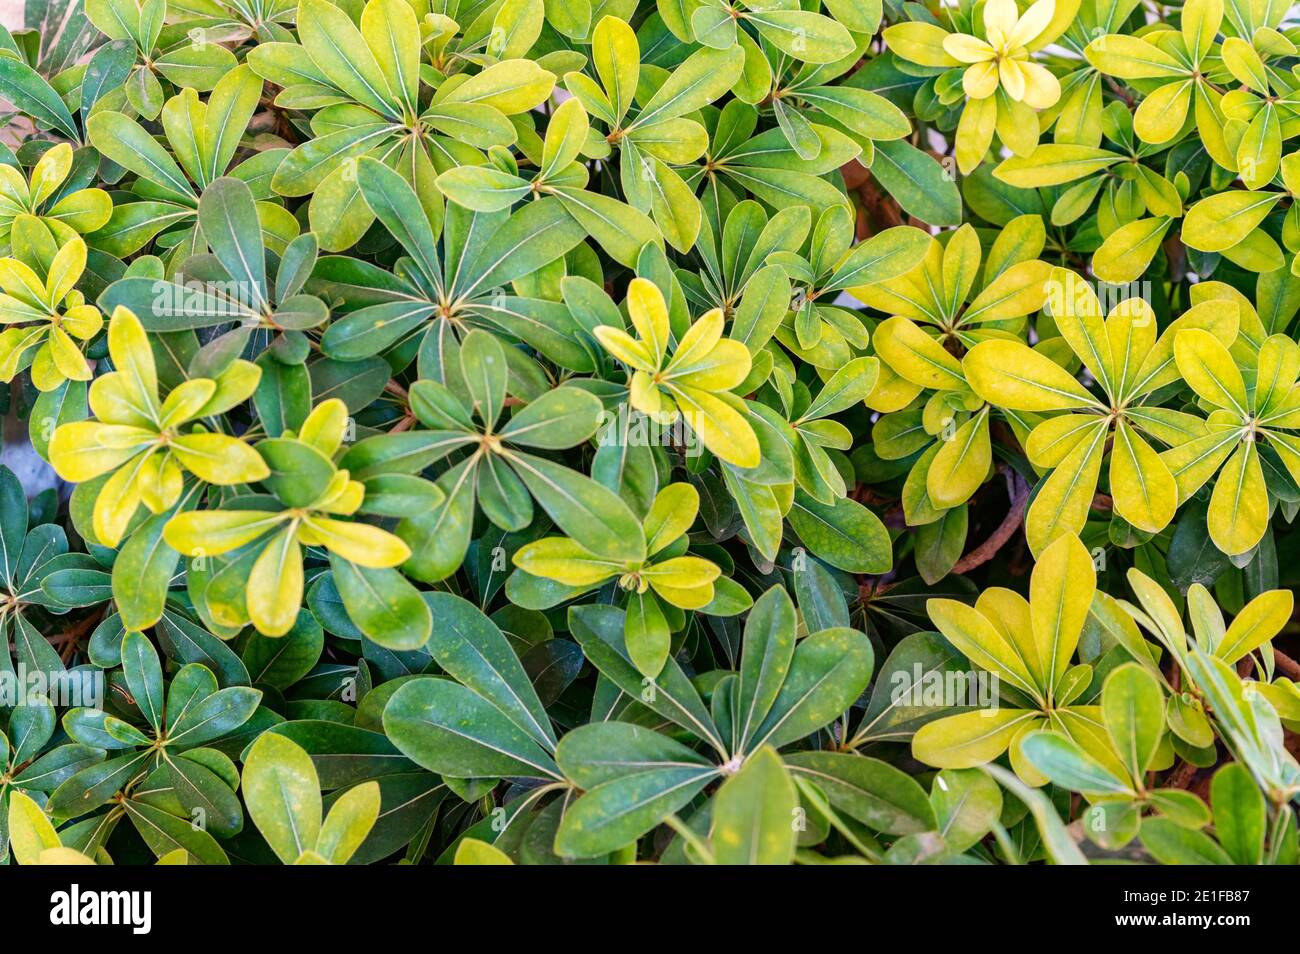 Close-up schefflera green foliage plant background. Selective focus Stock Photo